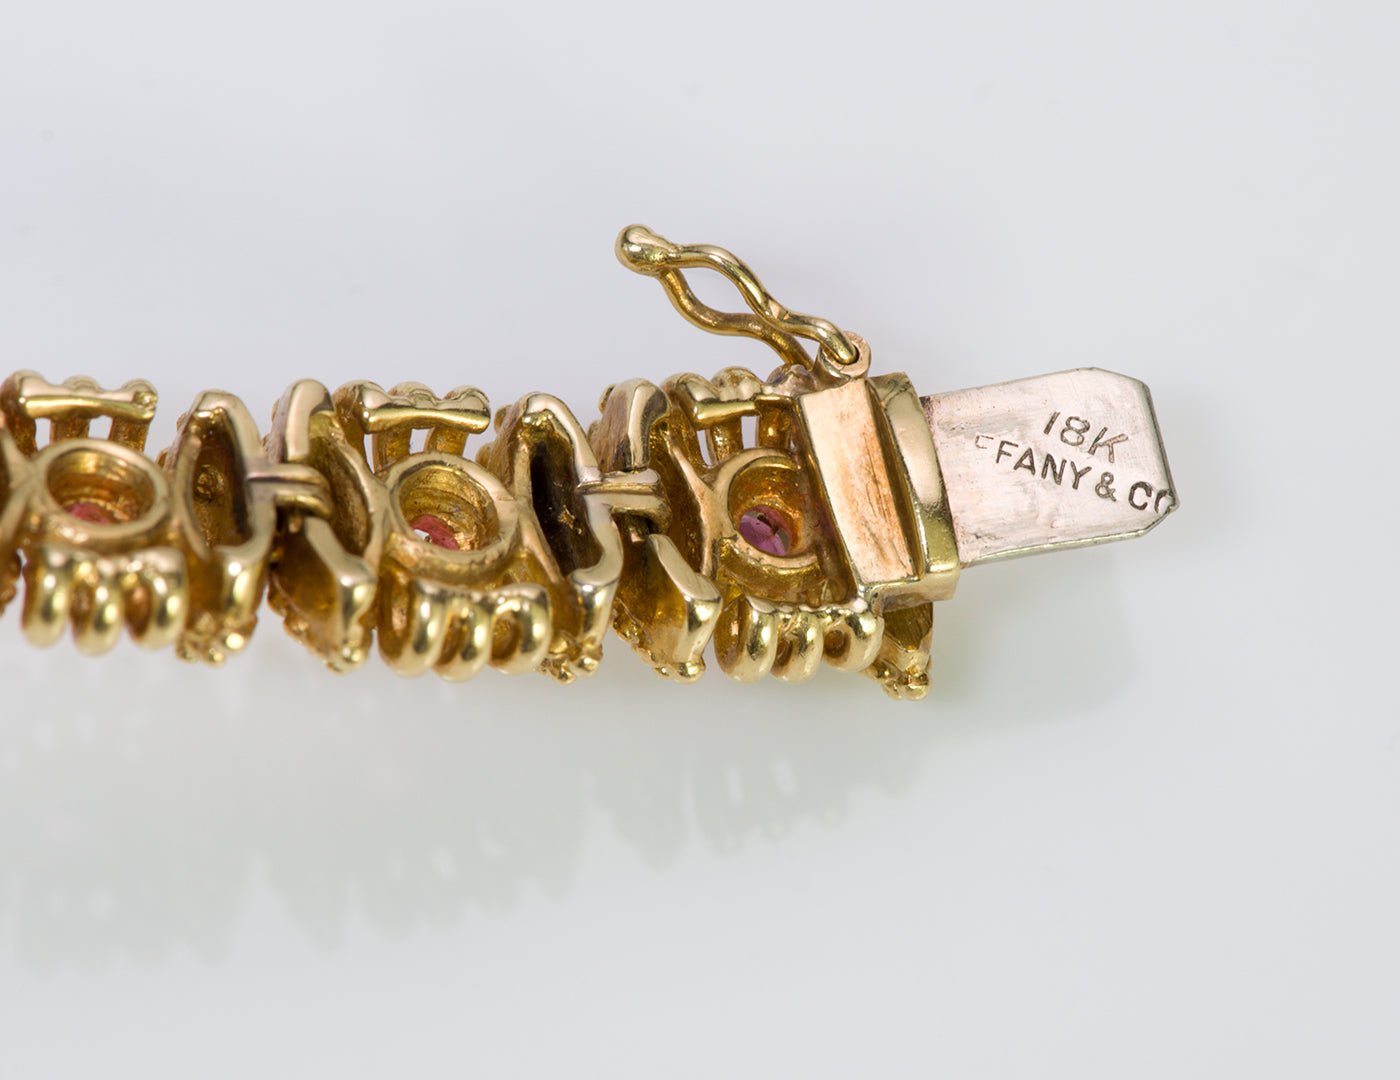 Tiffany & Co. Ruby 18K Yellow Gold Bracelet